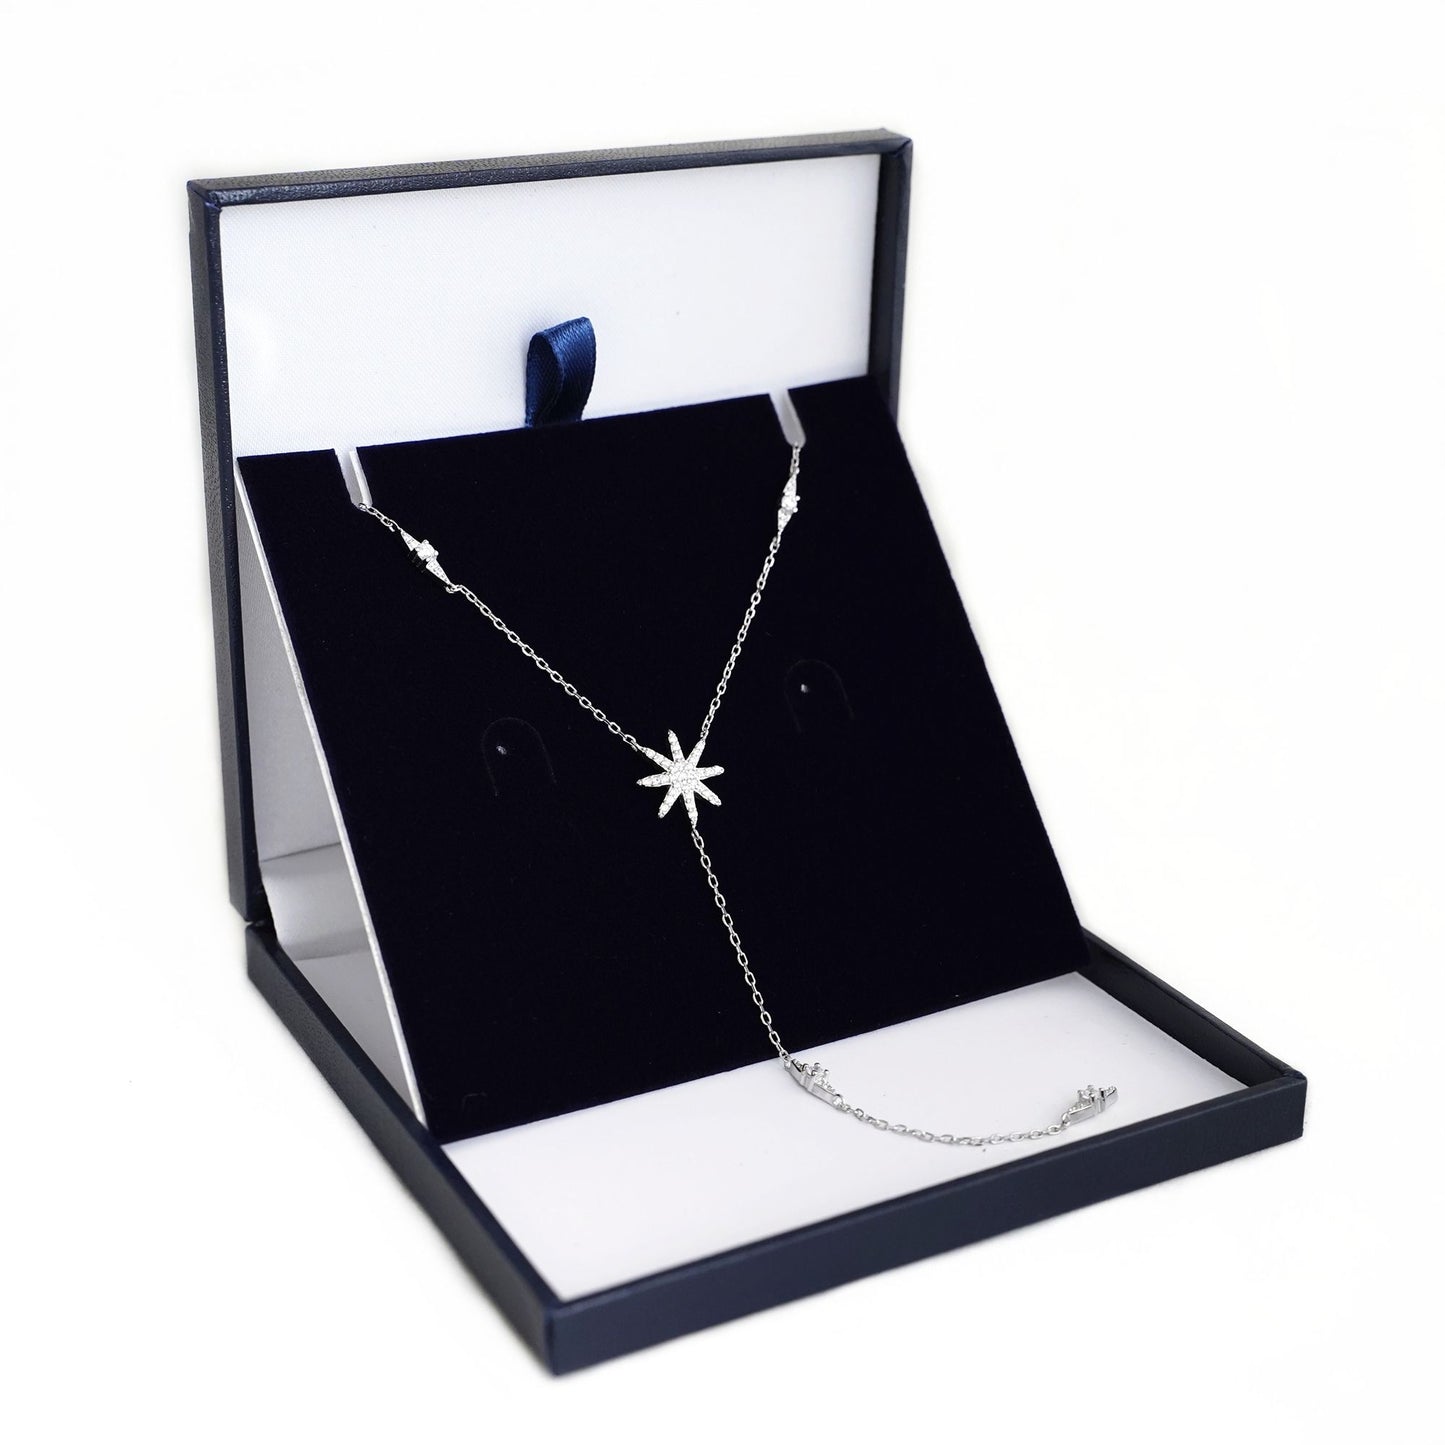 Sterling Silver Lariat Necklace with CZ Sunlight Star Sunburst Drop - sugarkittenlondon